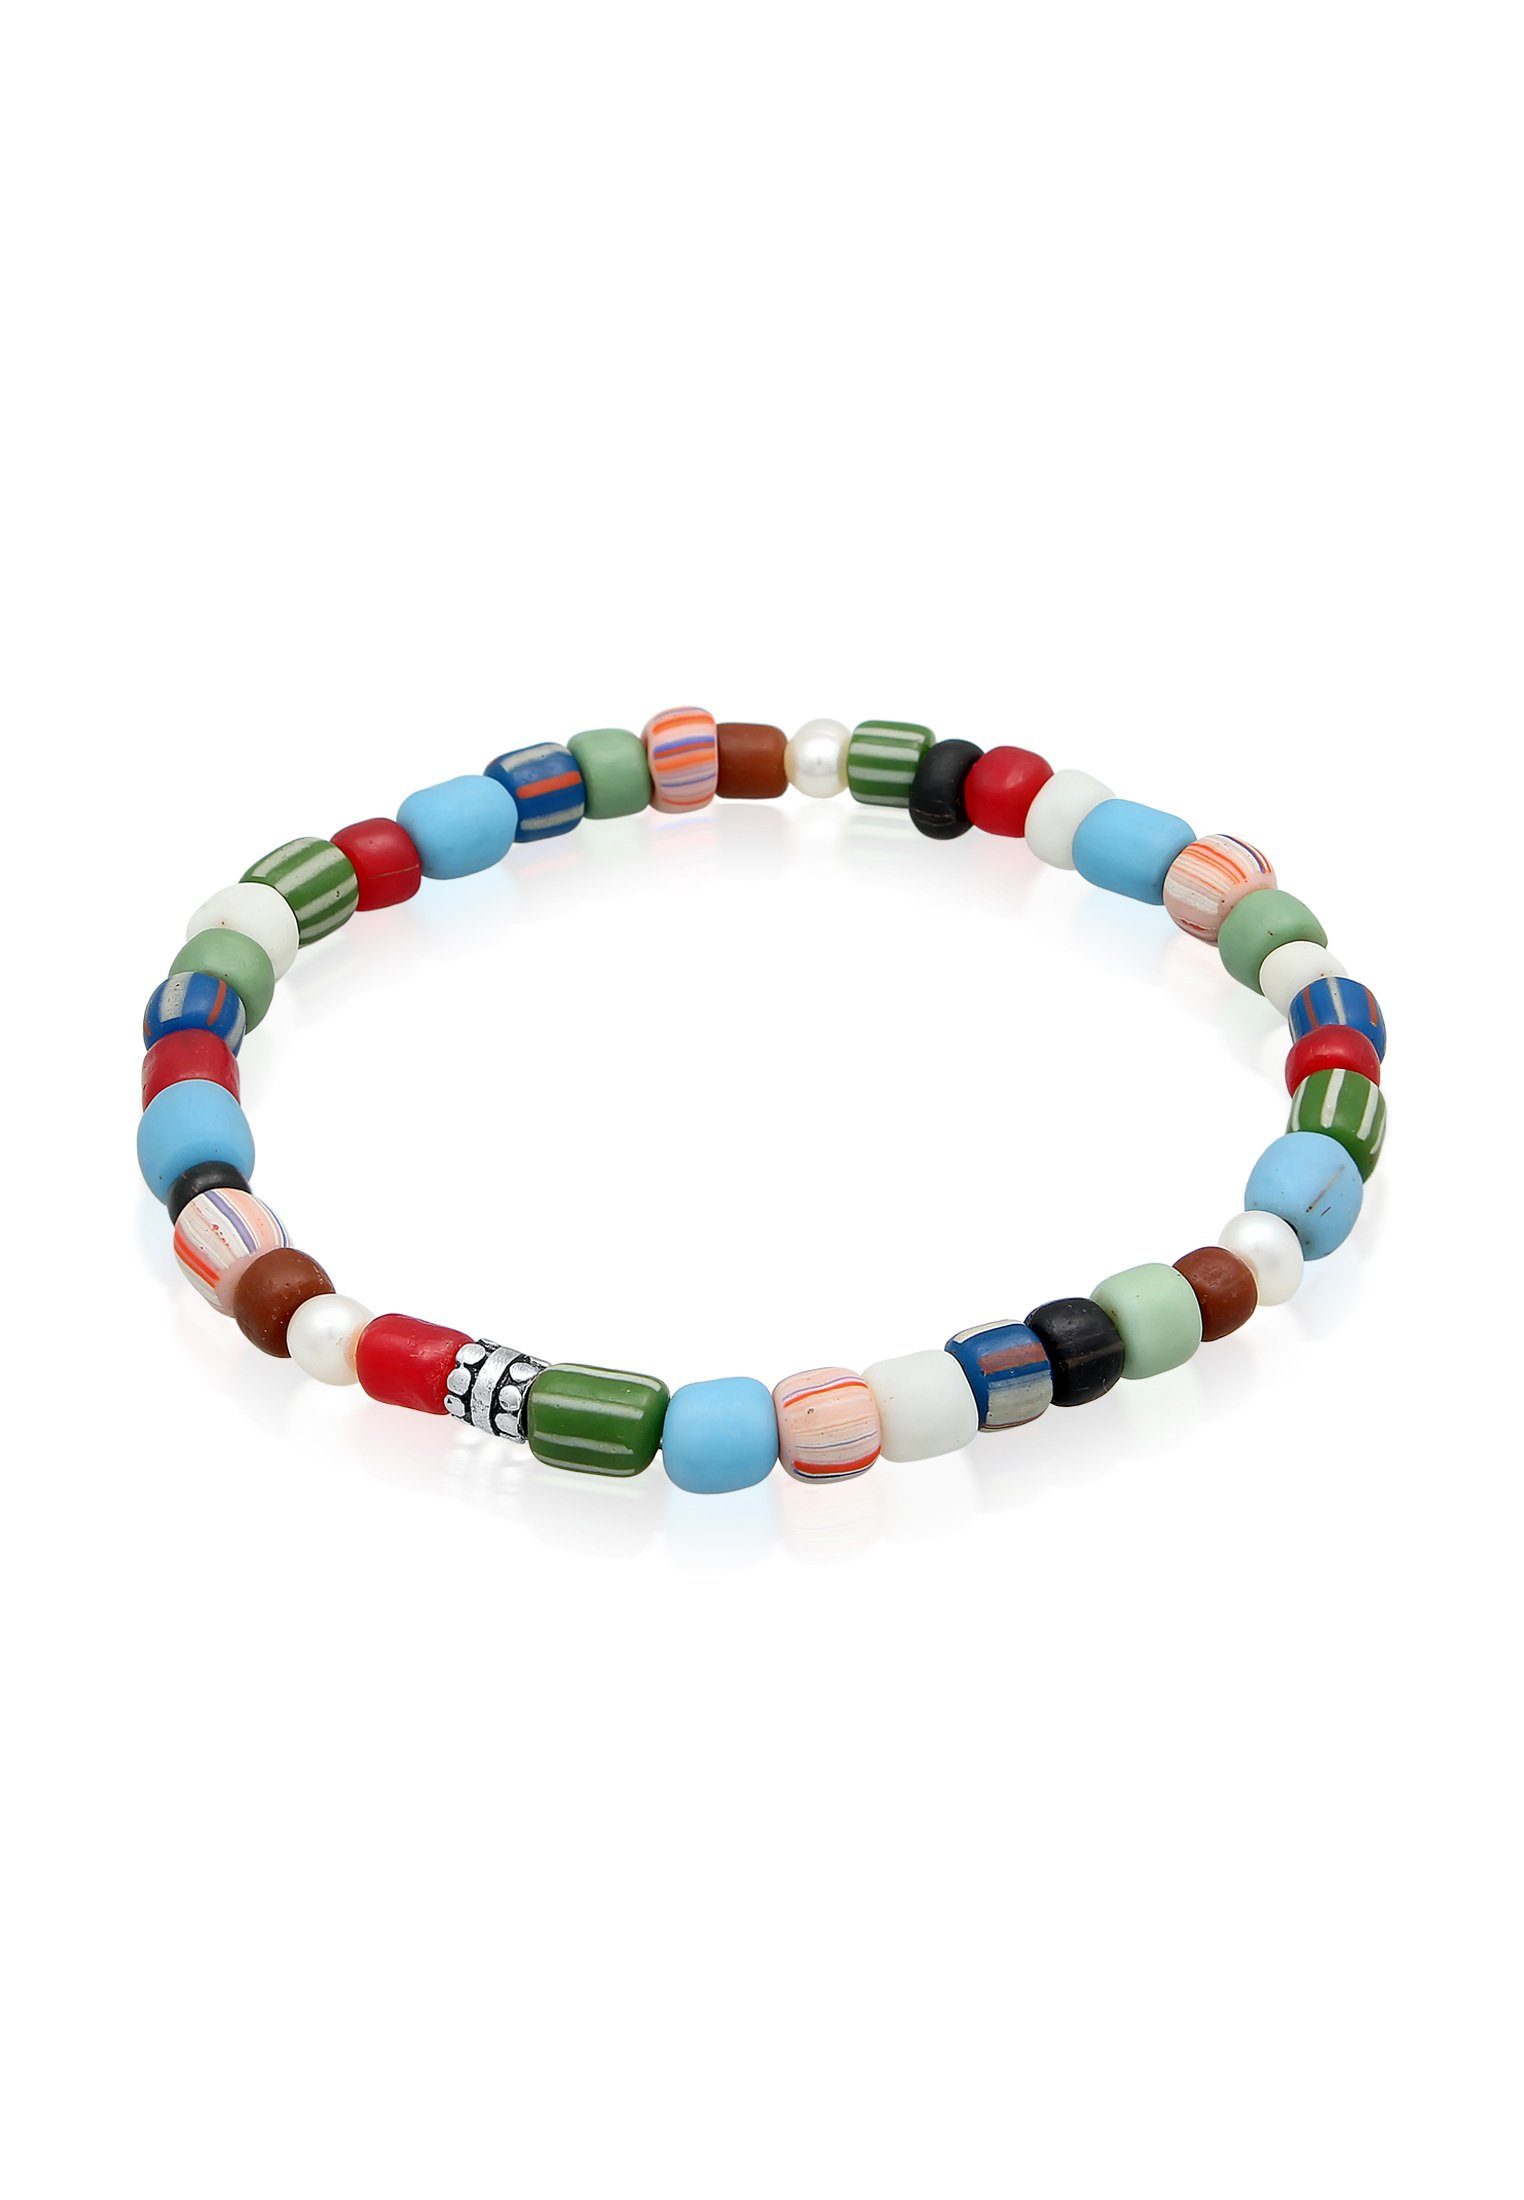 Kuzzoi Bead-Armband-Set Glas Beads Bunt Süßwasserperlen 925 Silber | Charm-Armbänder